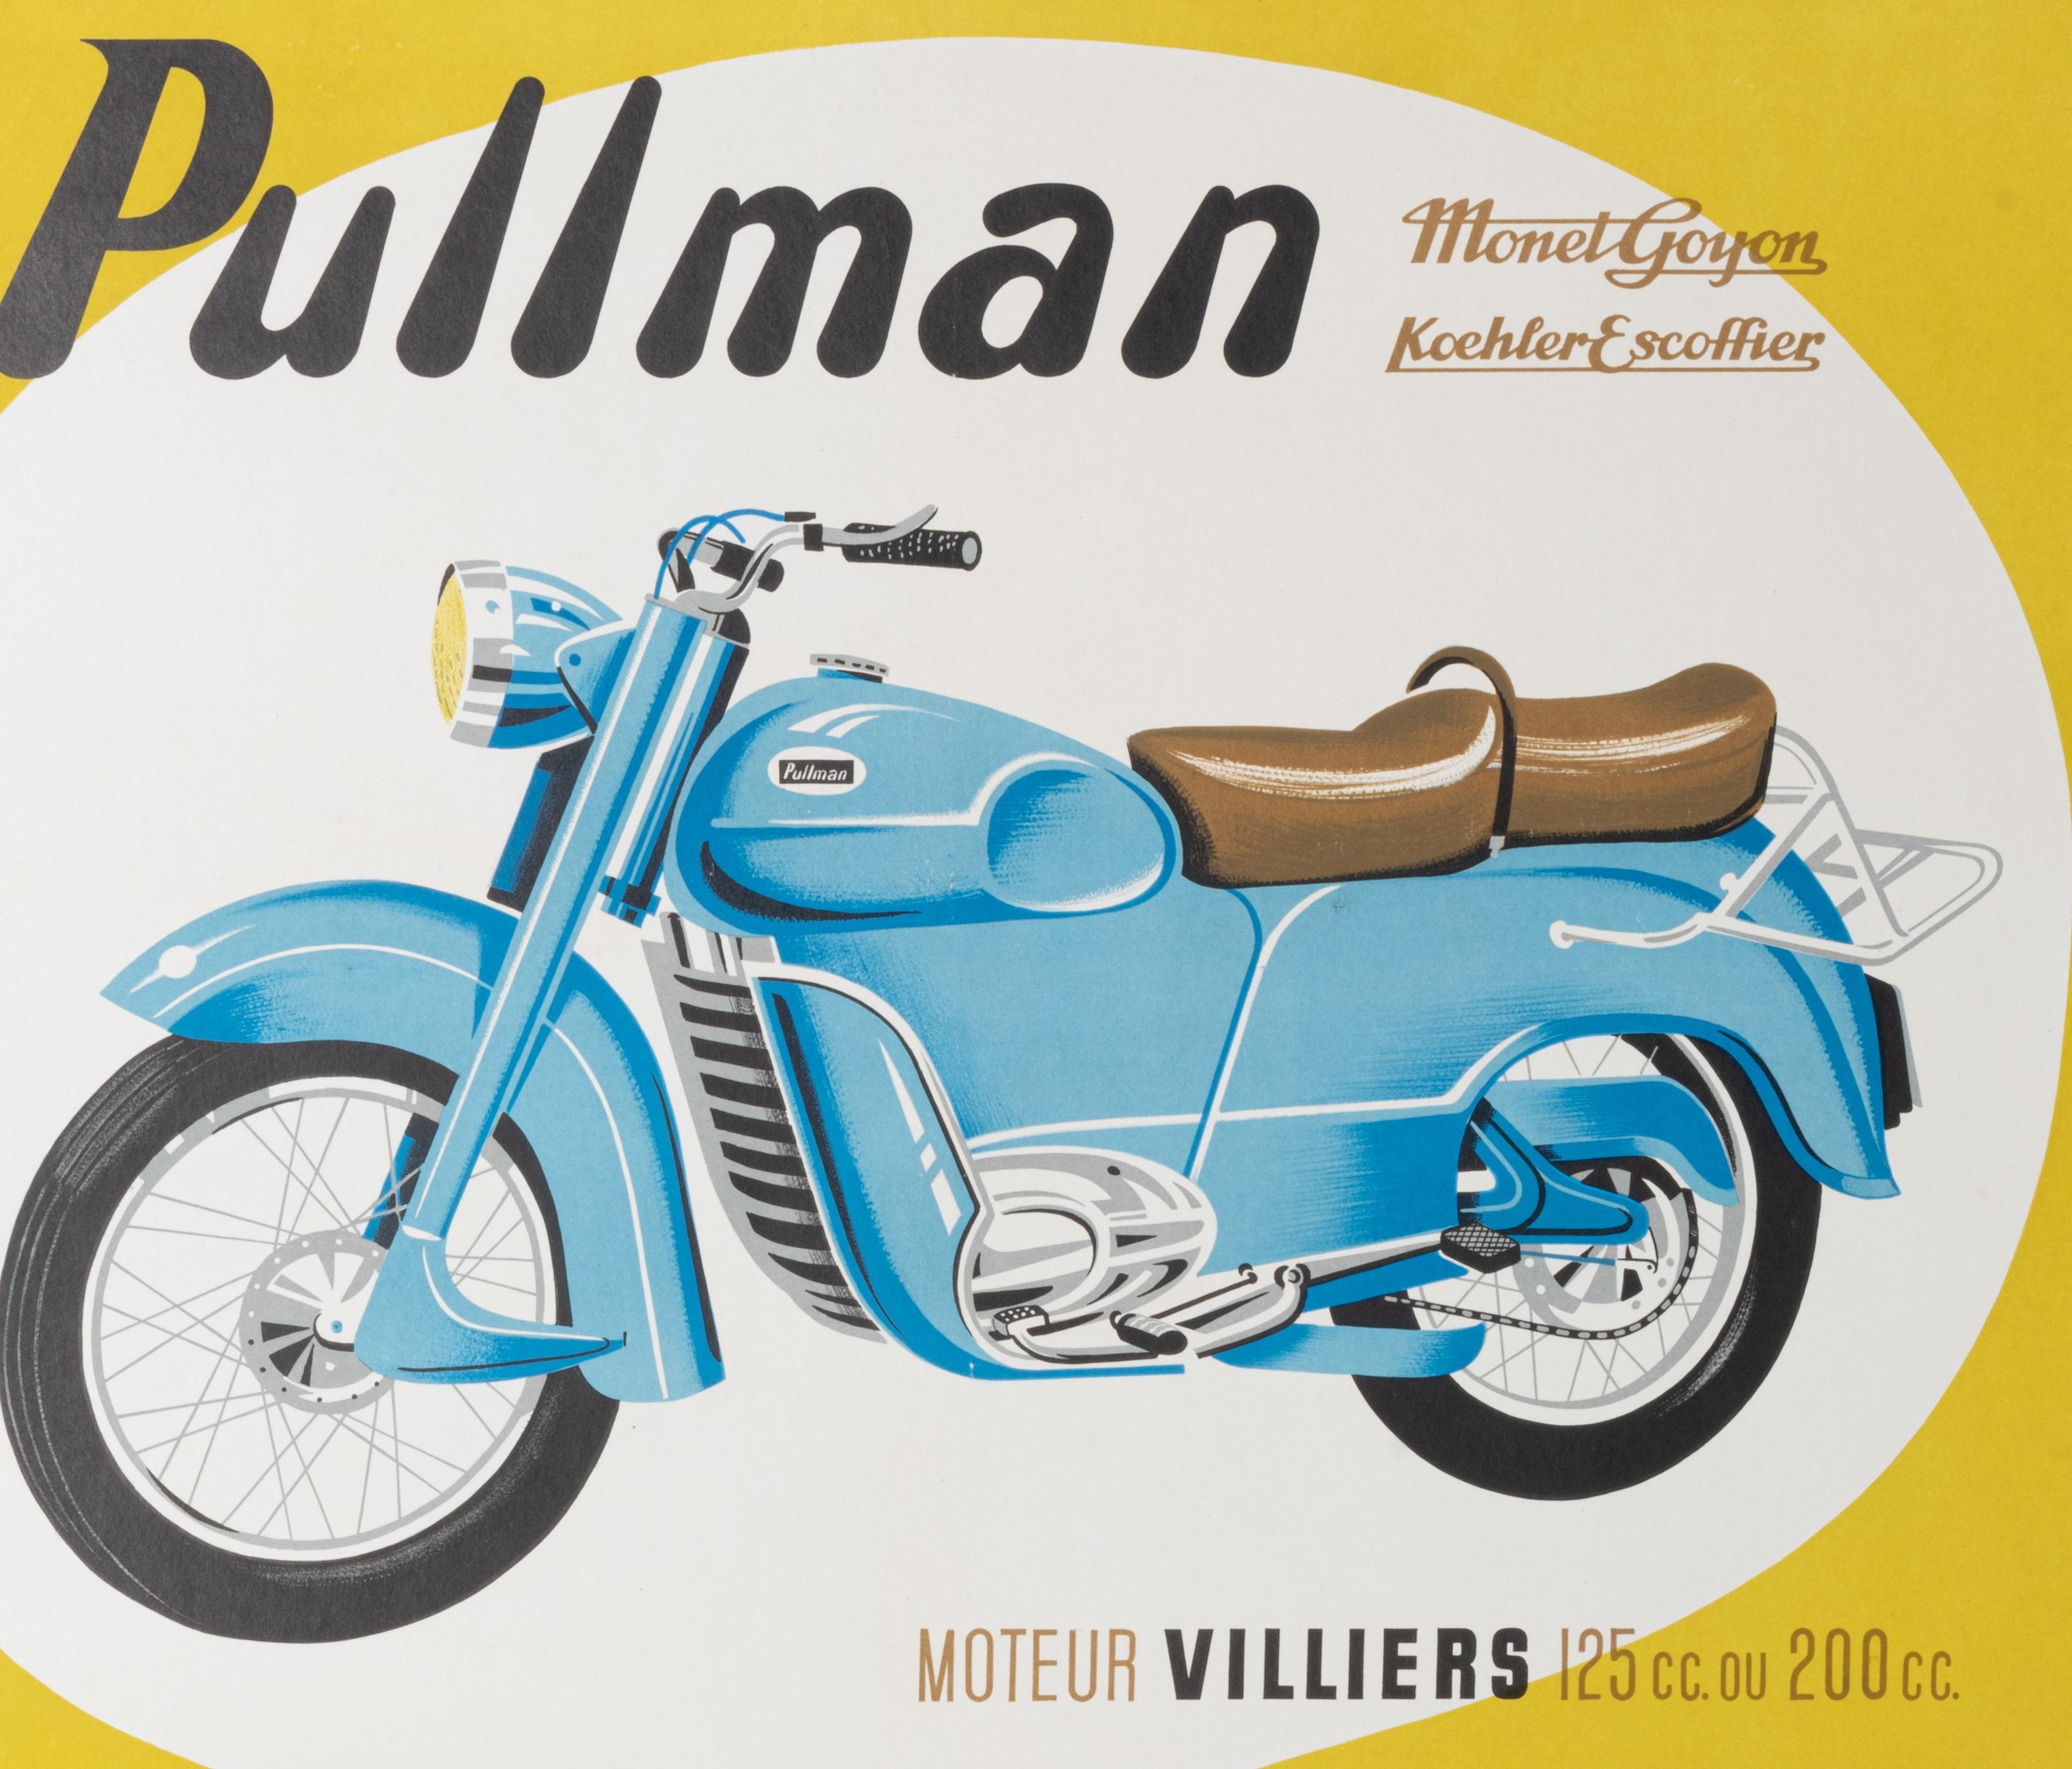 French Gouju Amalric, Original Motocycle Poster, Pullman, Monet Goyon Koehler, 1956 For Sale